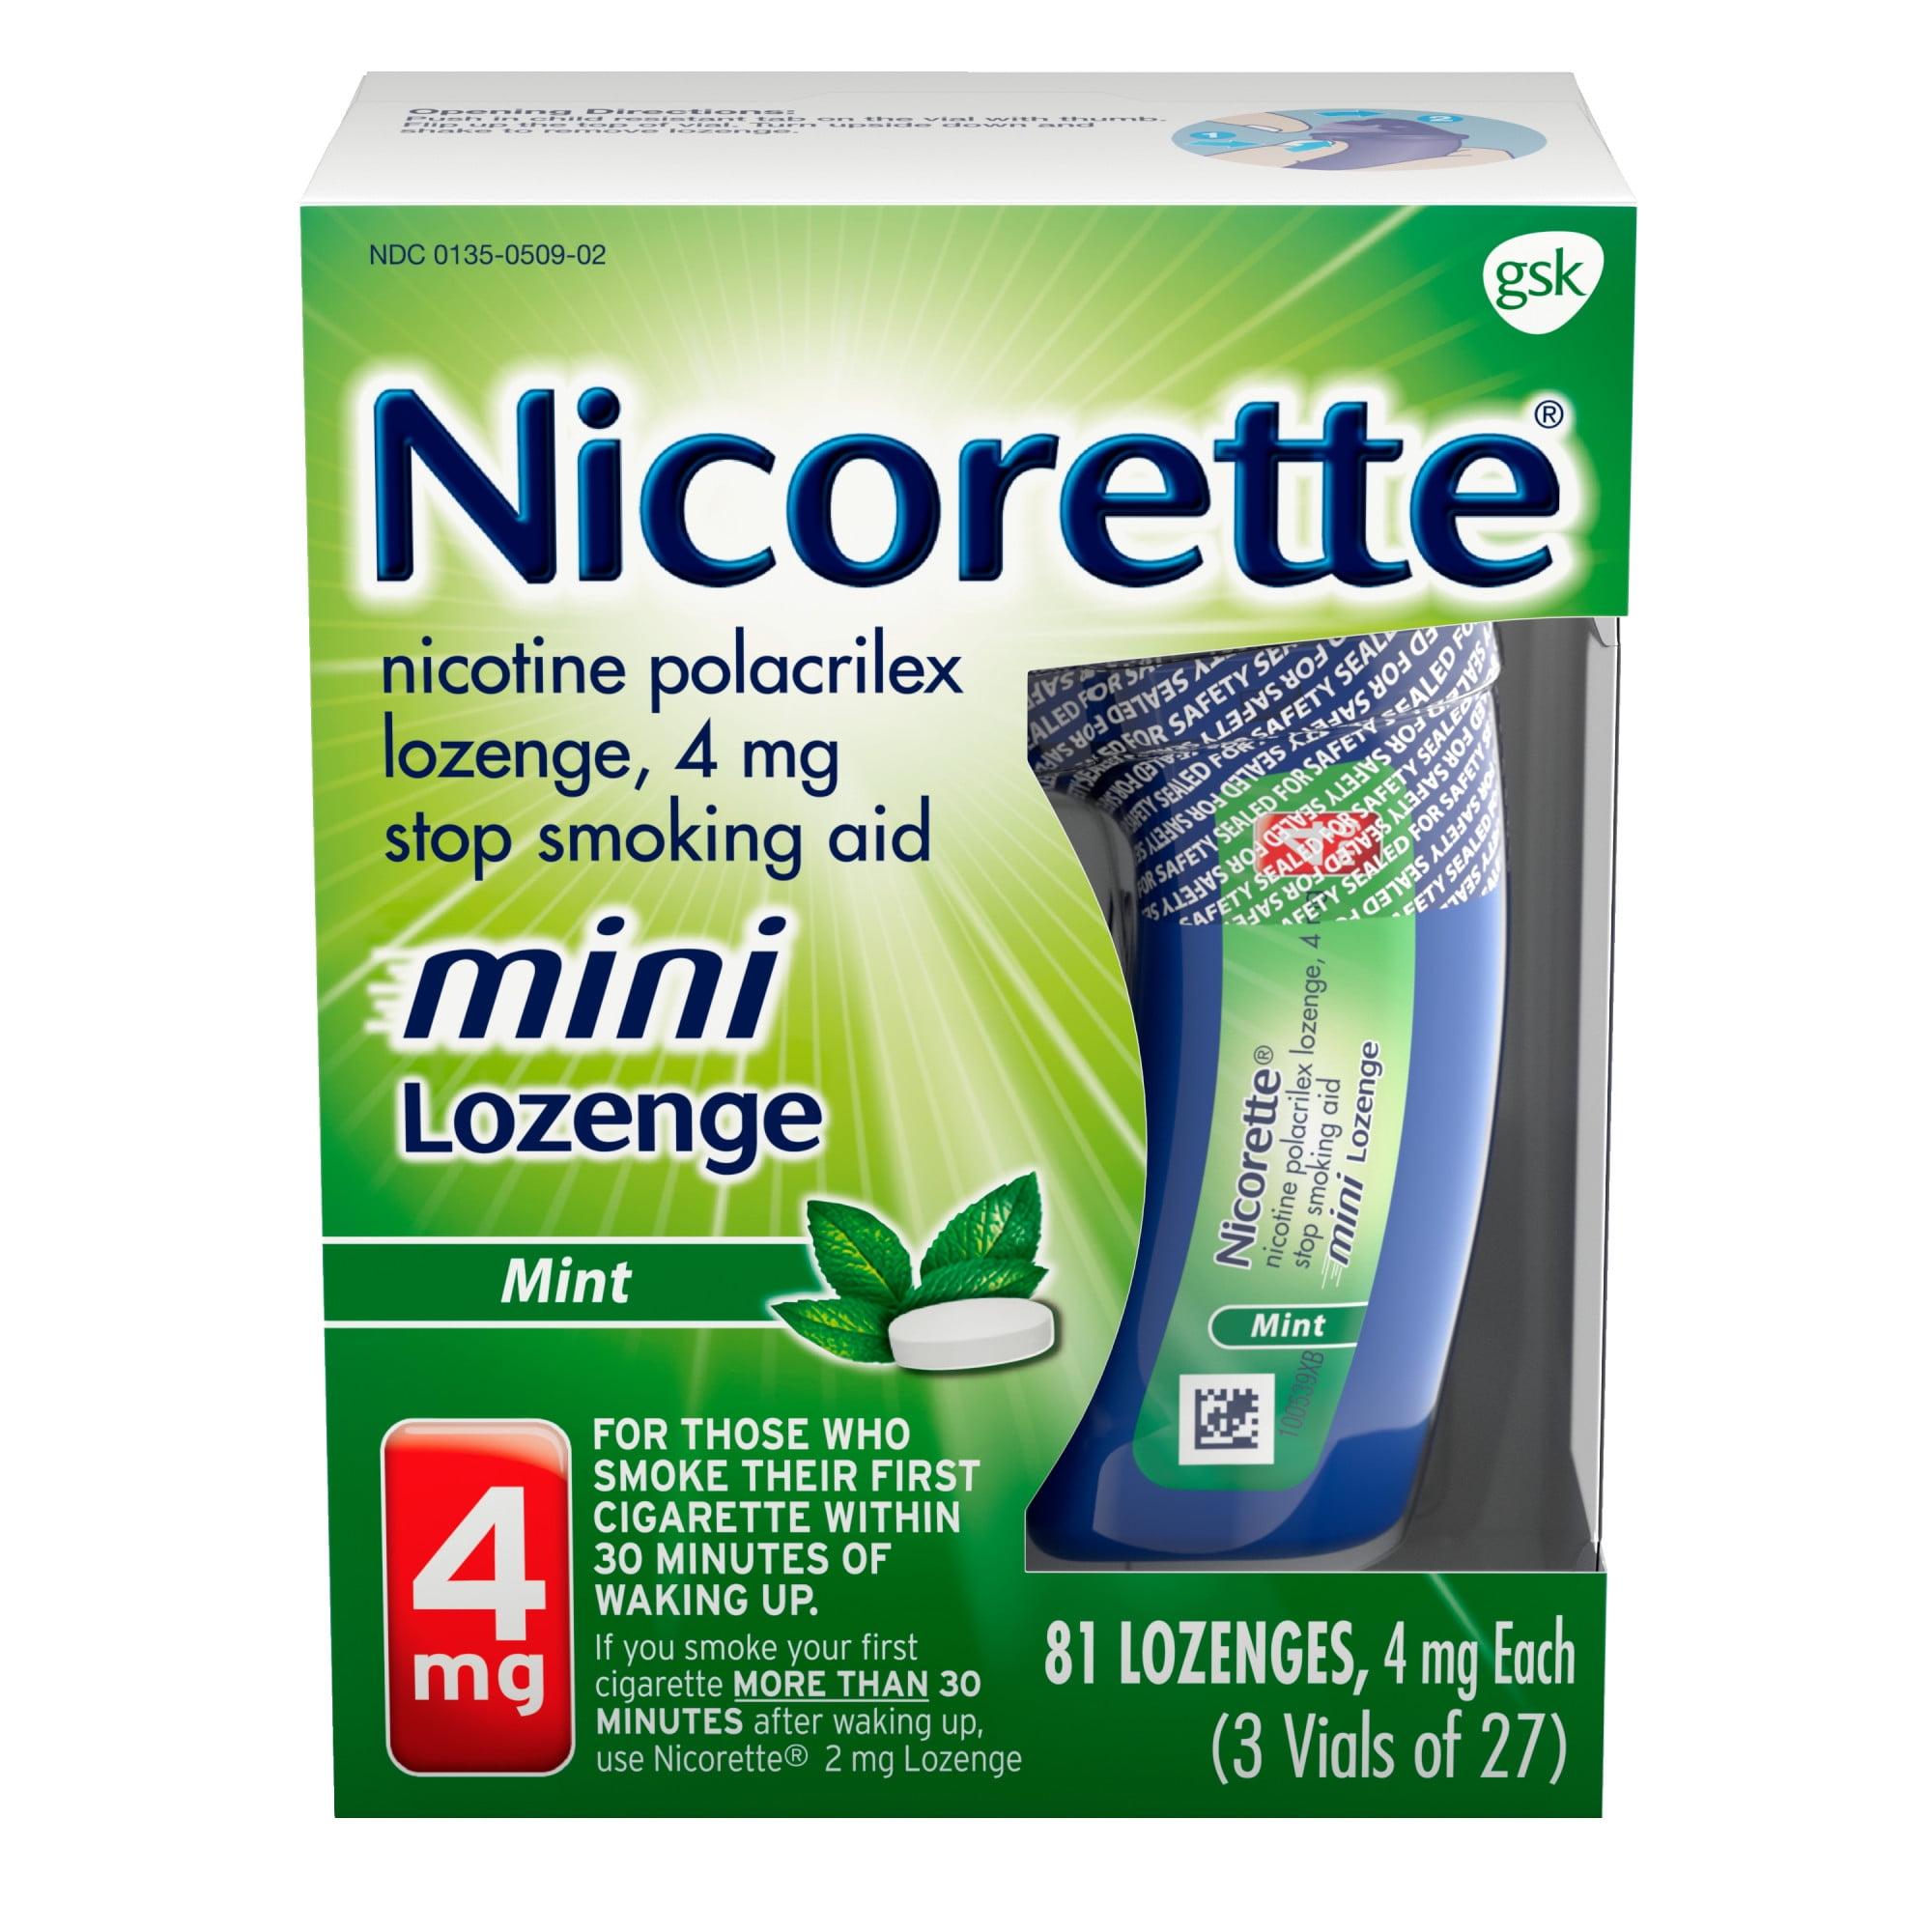 nicorette-mini-nicotine-lozenges-to-stop-smoking-mint-flavor-4-mg-81